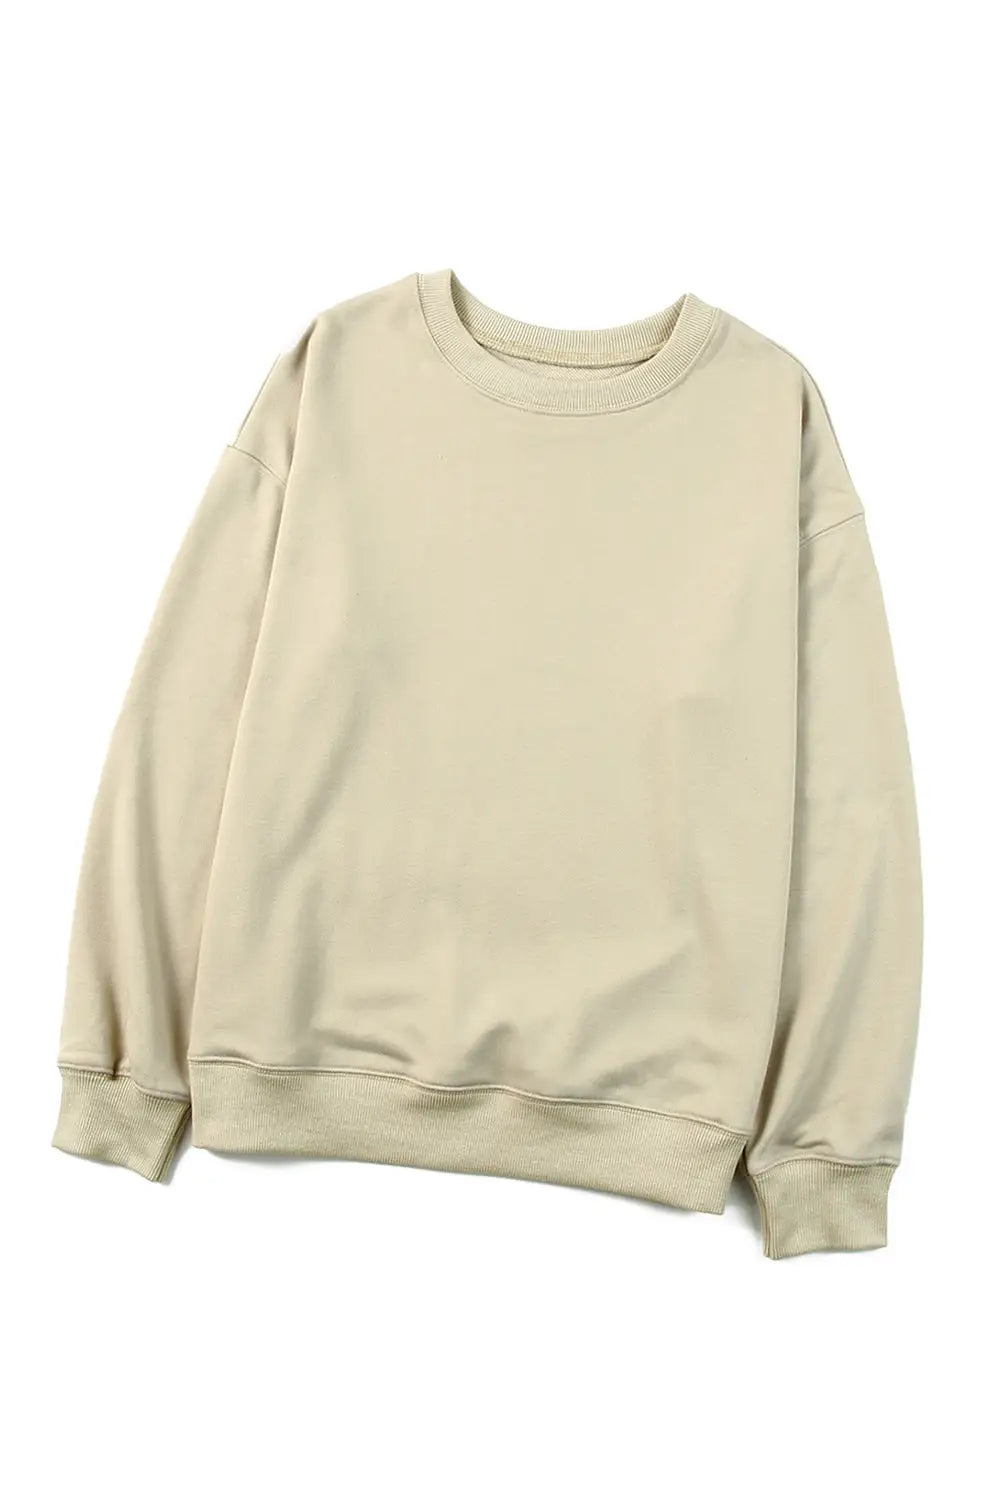 Black christmas pattern sequined crewneck sweatshirt - graphic sweatshirts